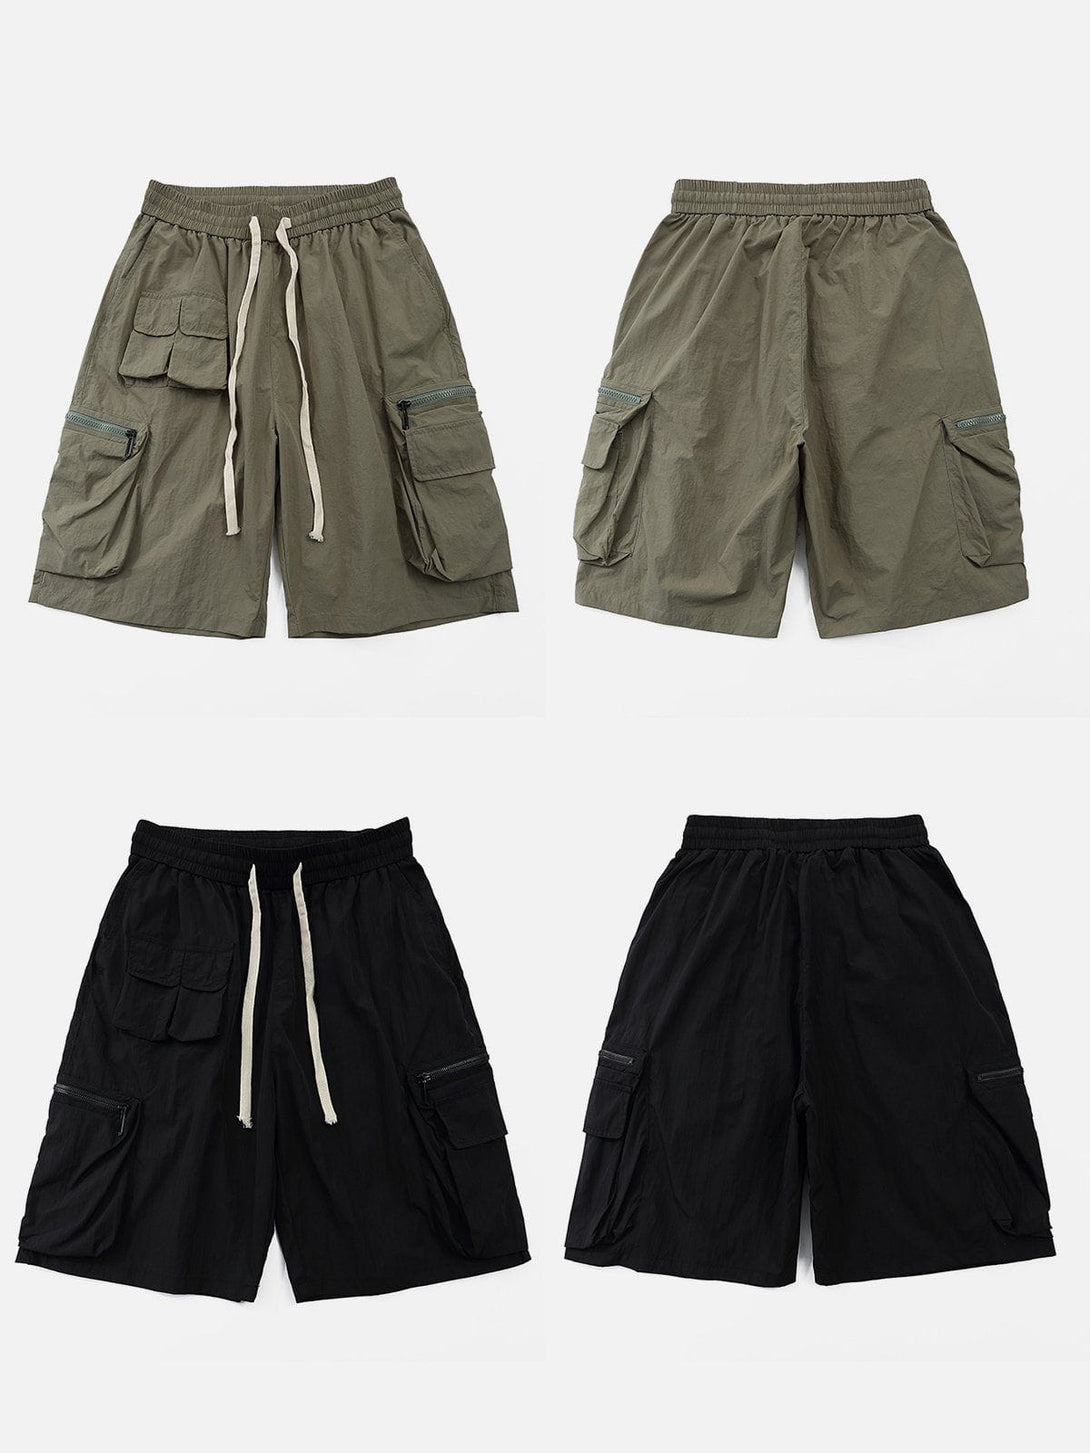 Majesda® - Multi-Pocket Drawstring Shorts outfit ideas streetwear fashion